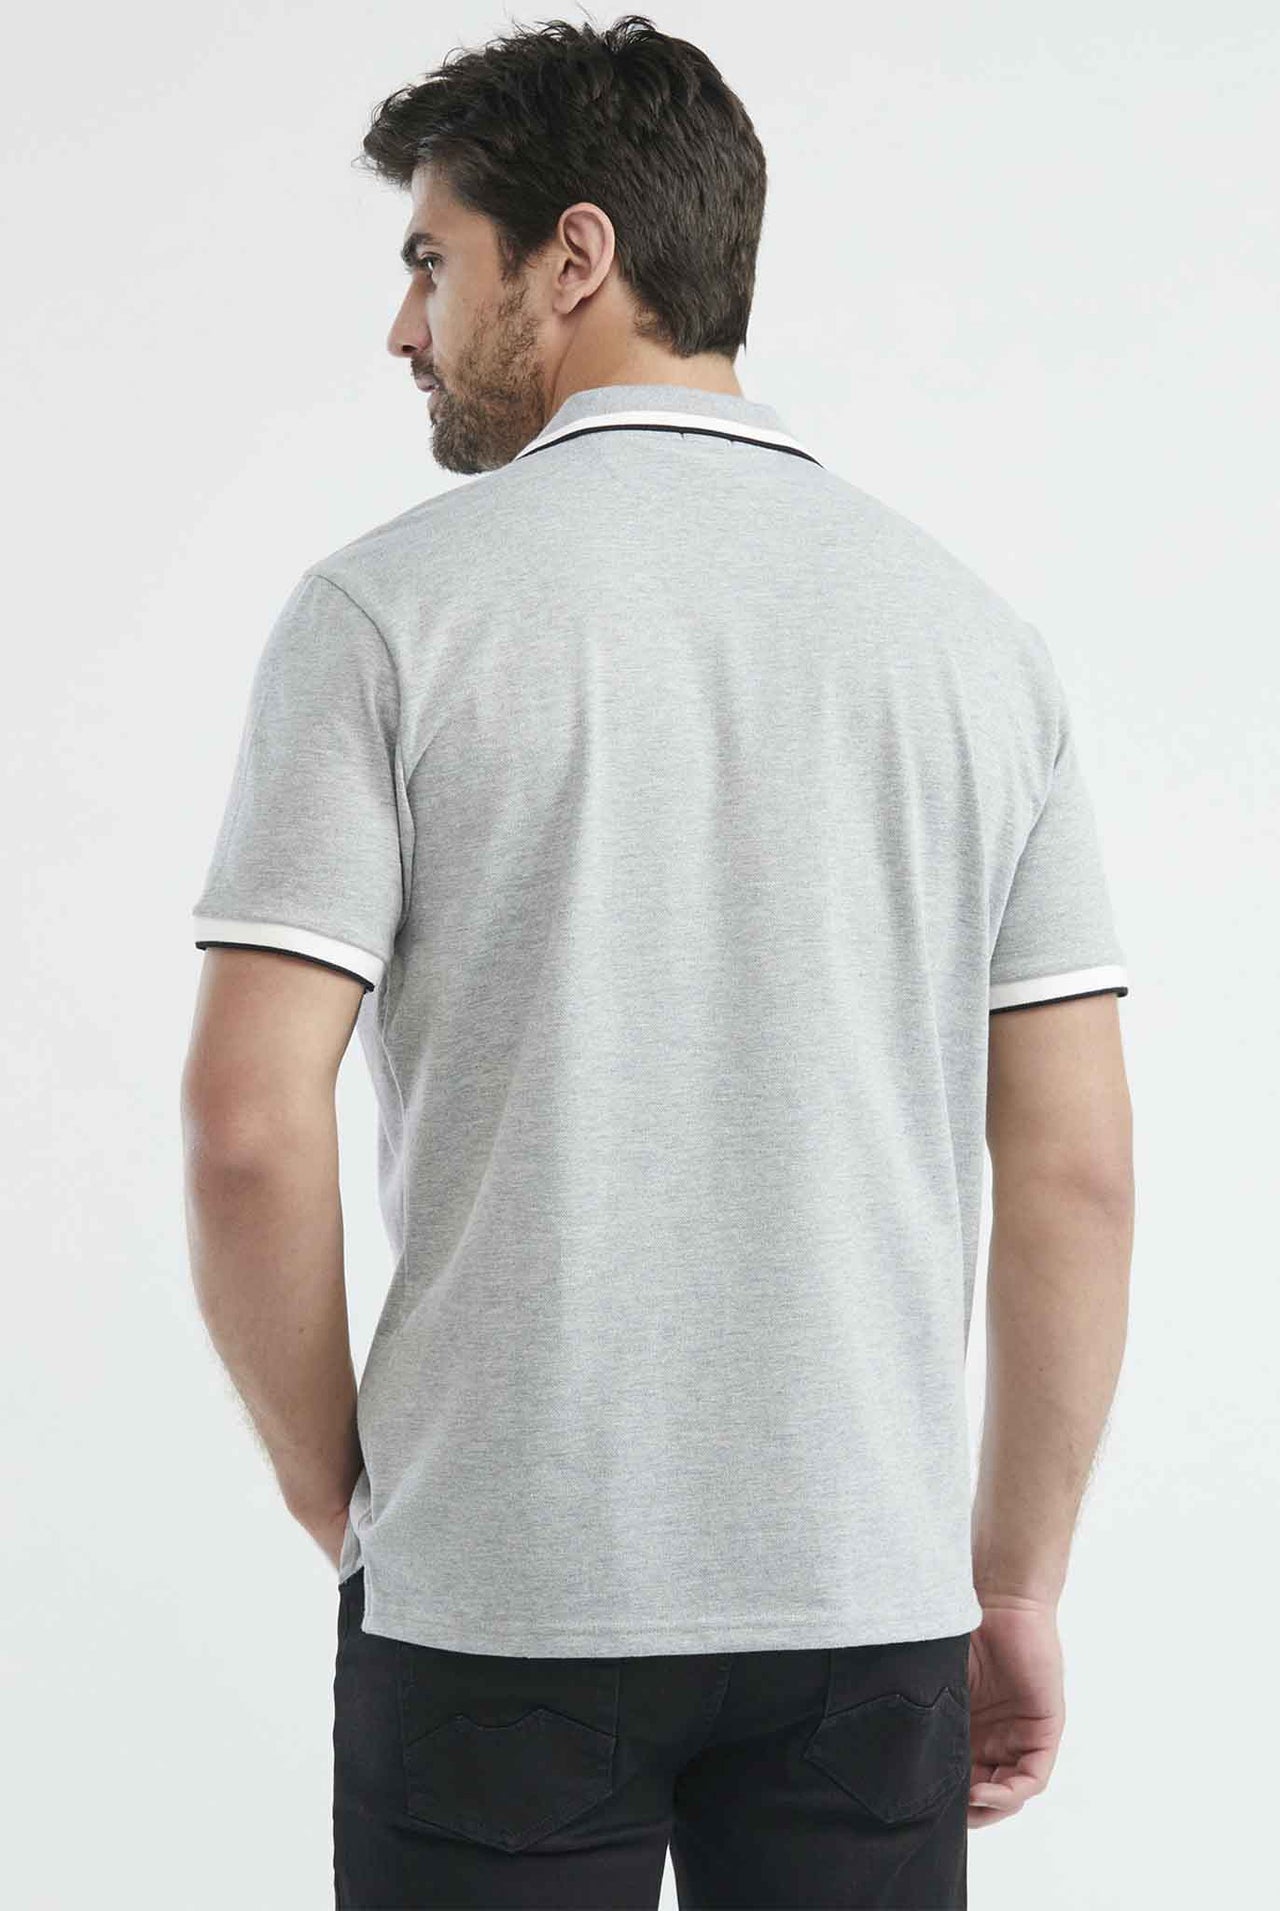 Camiseta Tipo Polo Chevignon Manga corta, Puño Y Cuello Con Rayas en contraste - Classic